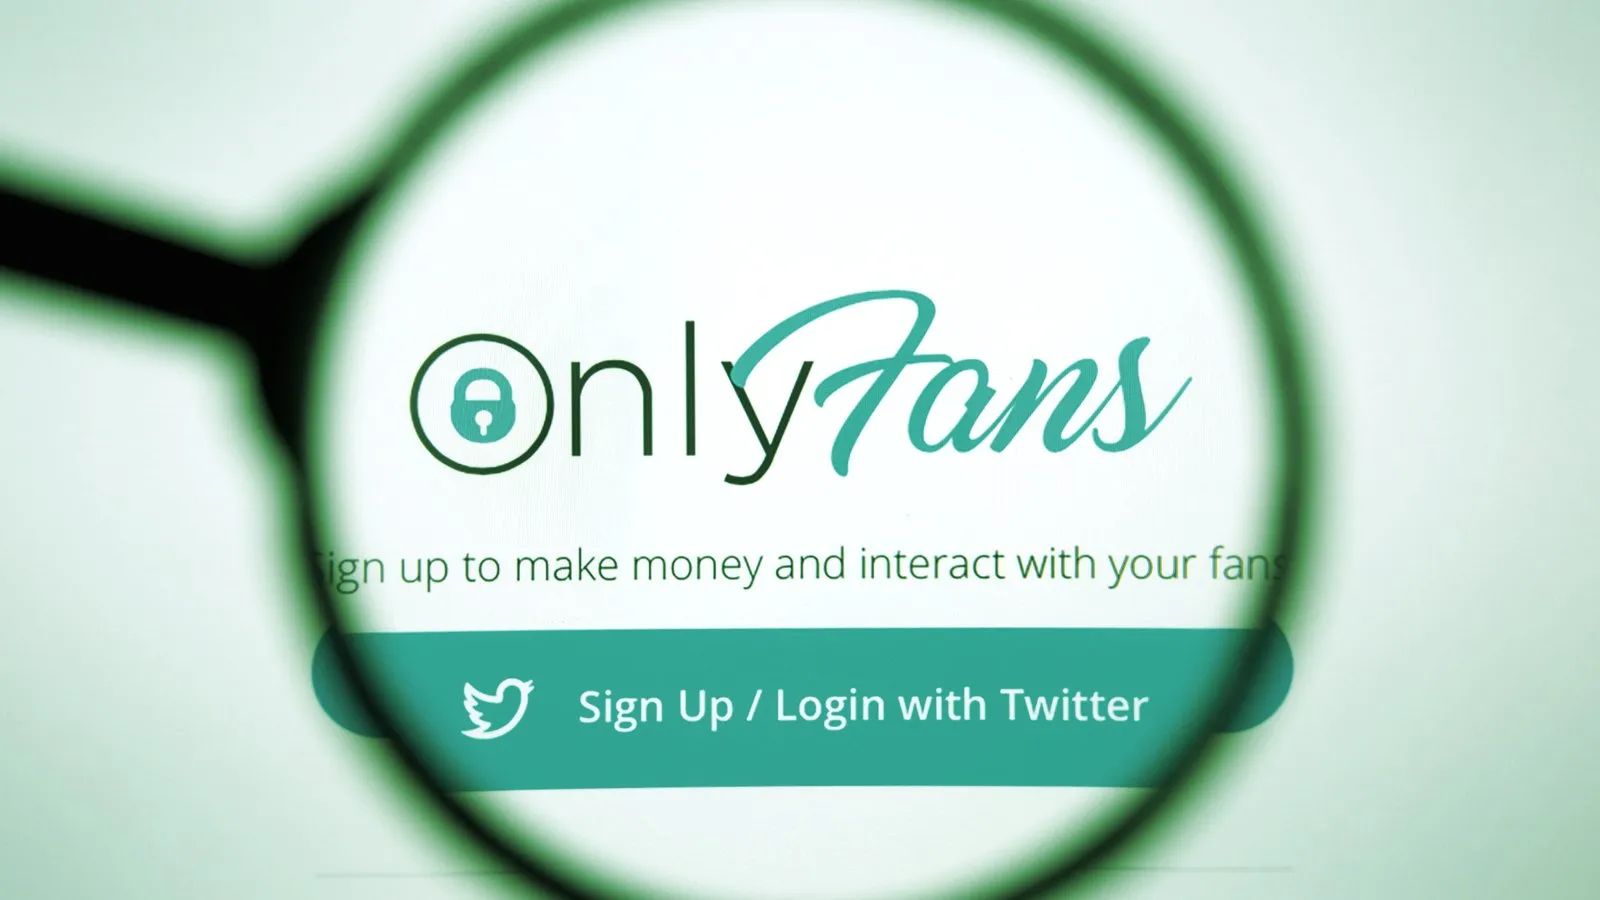 OnlyFans Logo. Image: Shutterstock